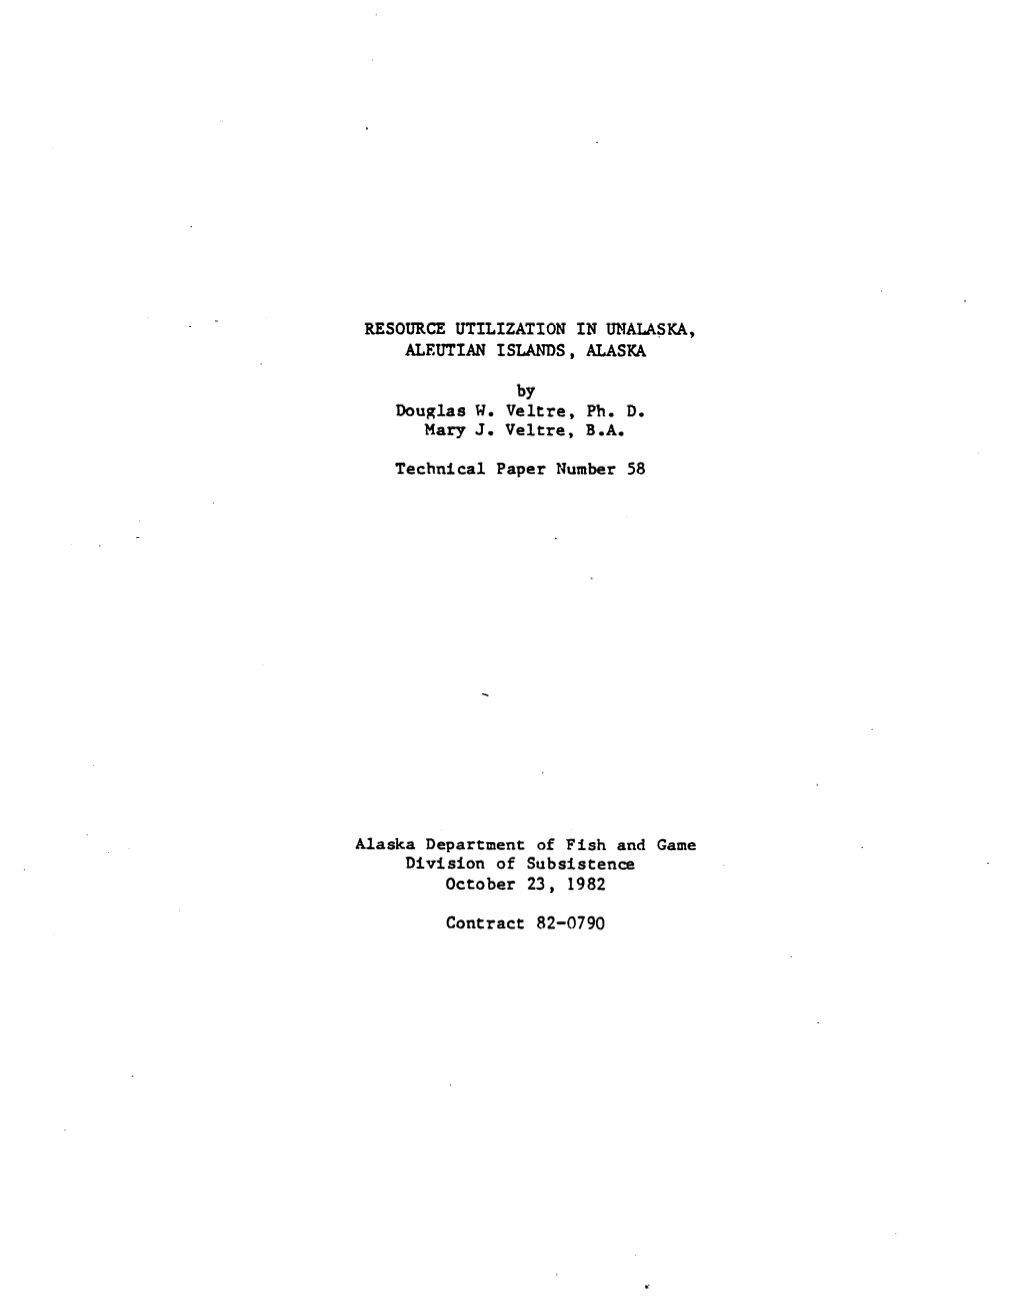 RESOURCE UTILIZATION in UNALASKA, ALEUTIAN ISLANDS, ALASKA Douglas W. Veltre, Ph. D. Mary J. Veltre, B.A. Technical Paper Number